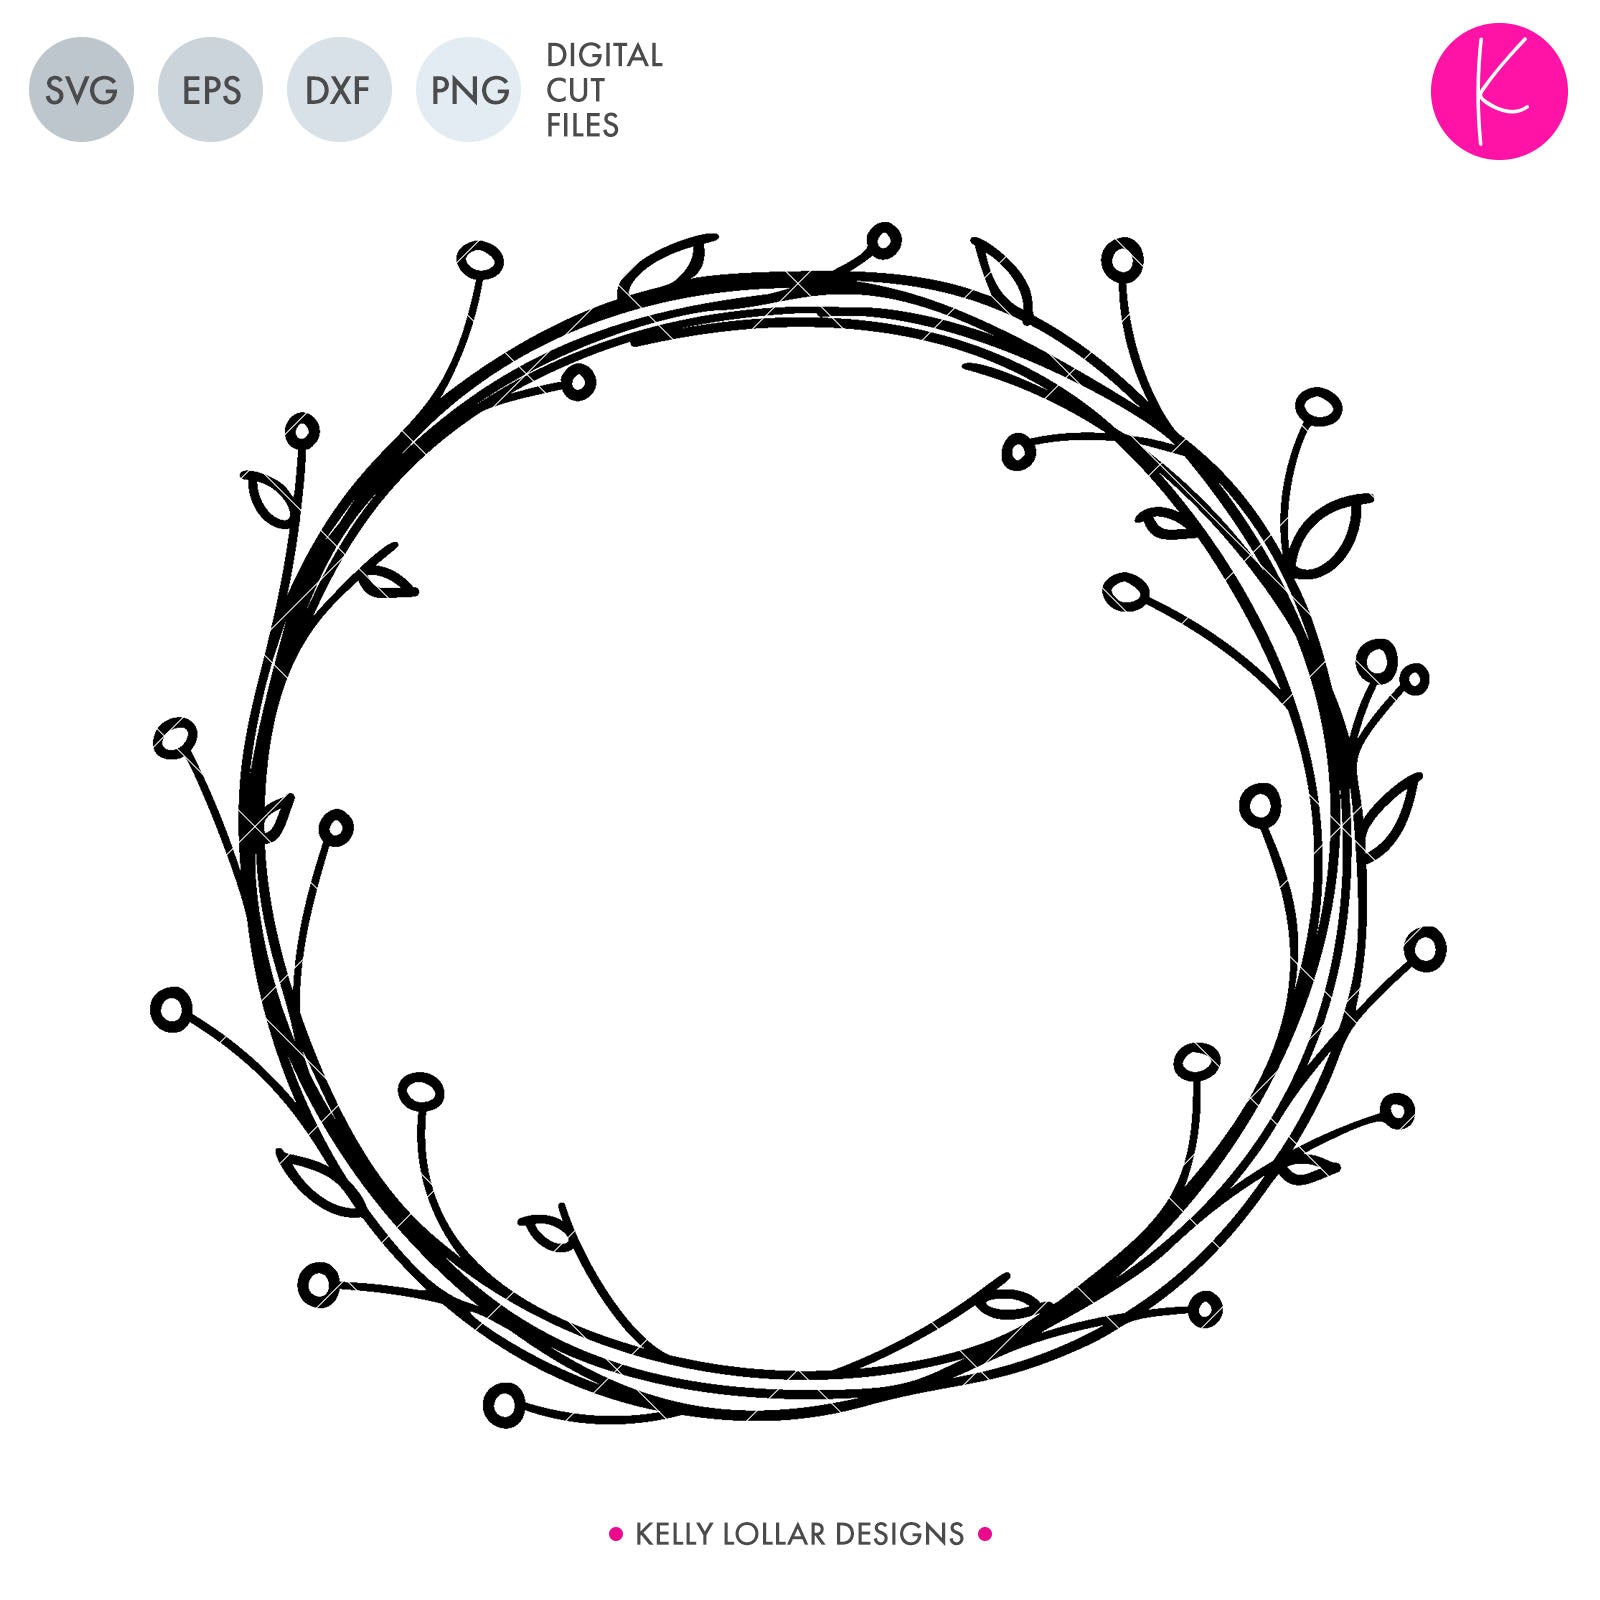 Floral Wreath SVG File | Kelly Lollar Designs